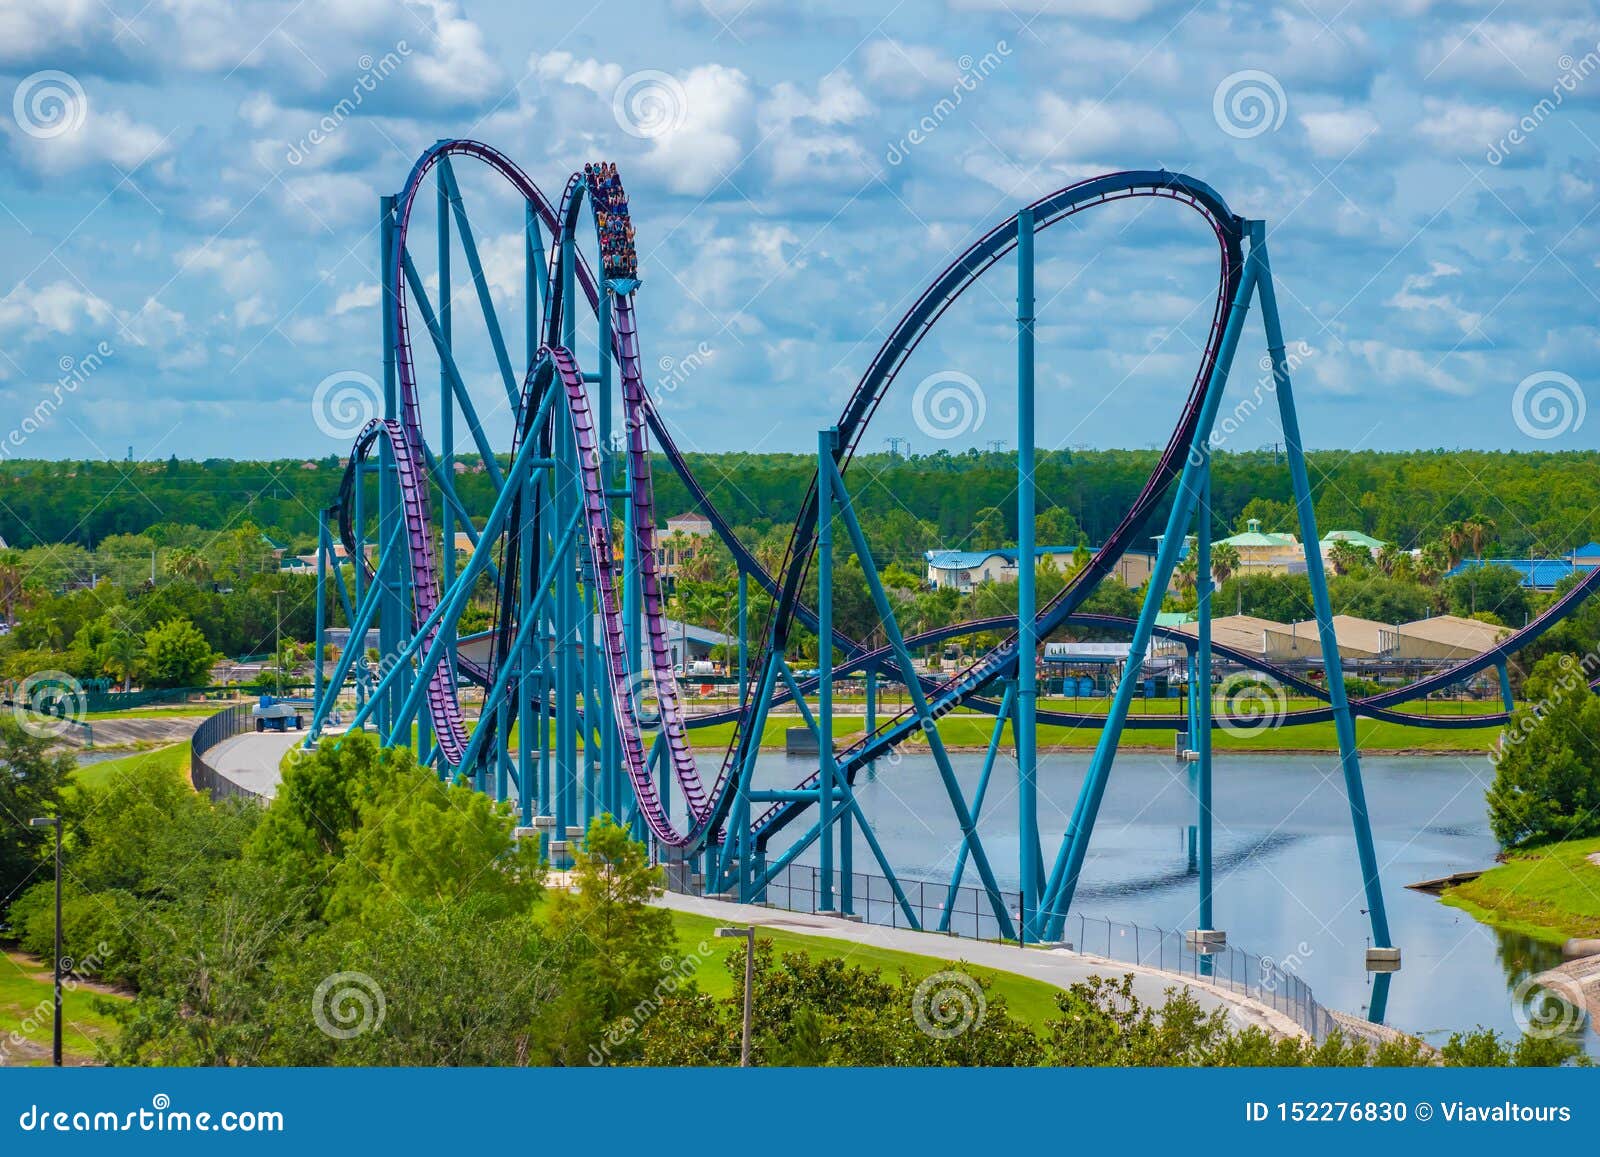 SeaWorld Orlando Rides & Roller Coasters